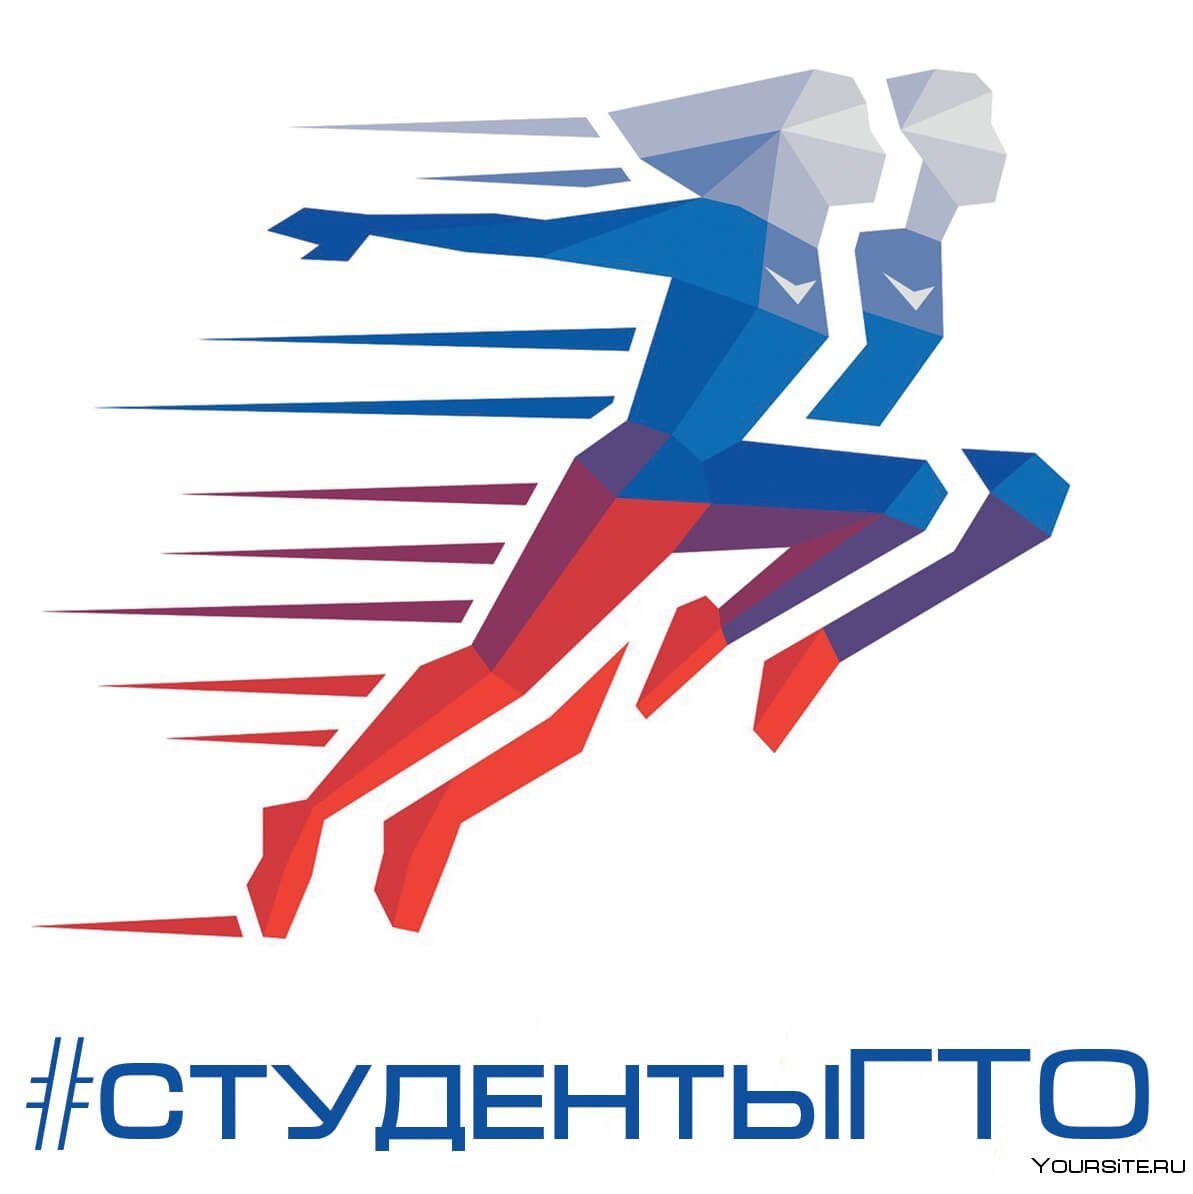 Яндекс спорт логотип